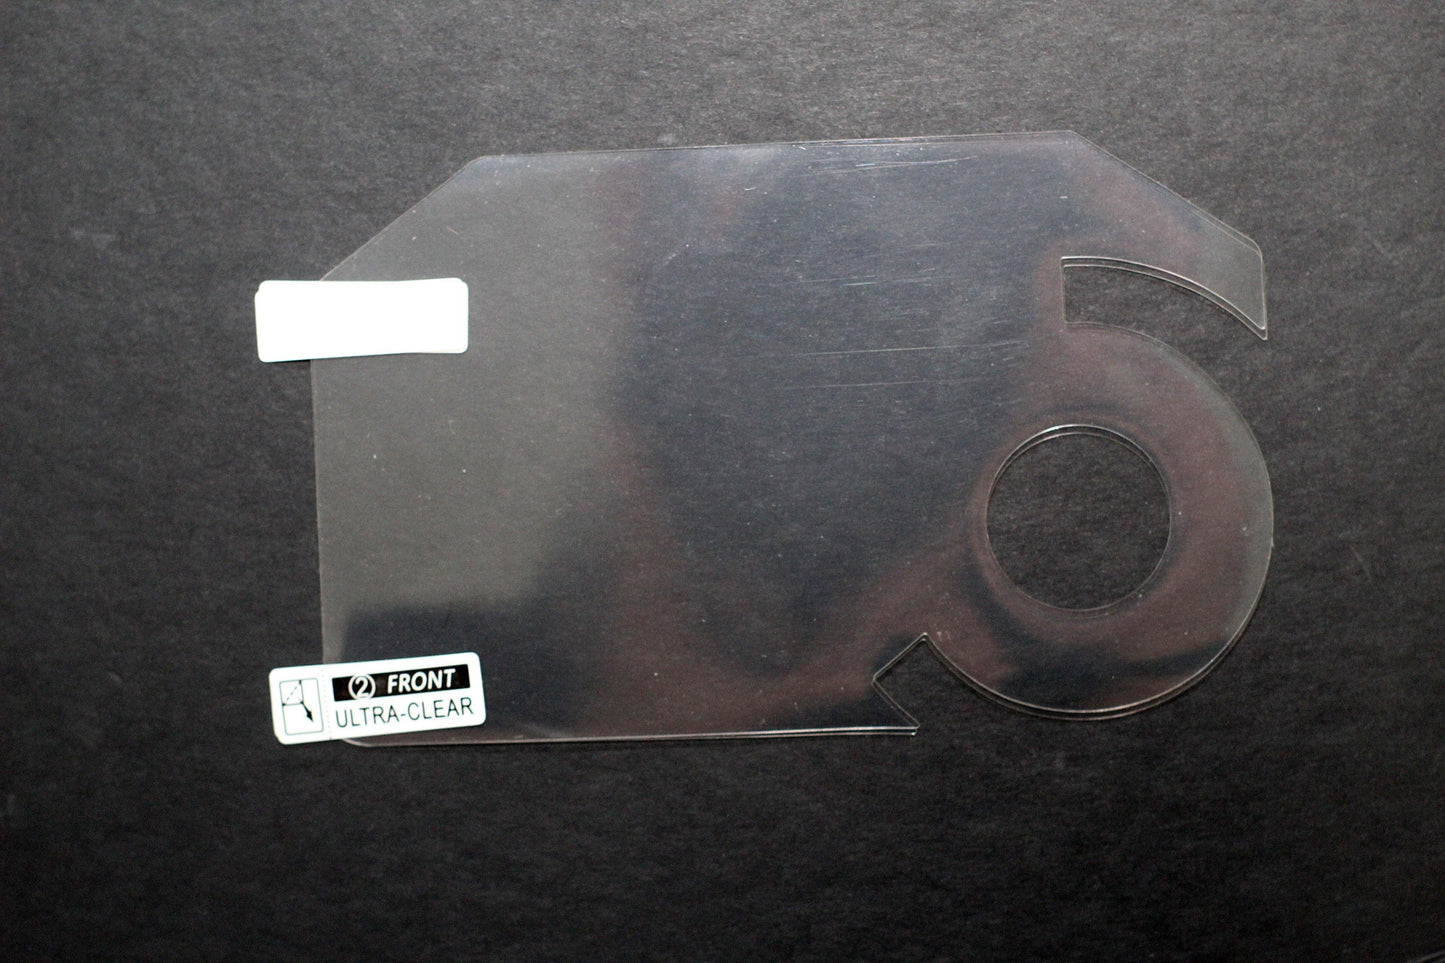 R&G Dashboard Screen Protector Kit fits for Honda CB1000R / CB1000R+ ('18-) - Durian Bikers